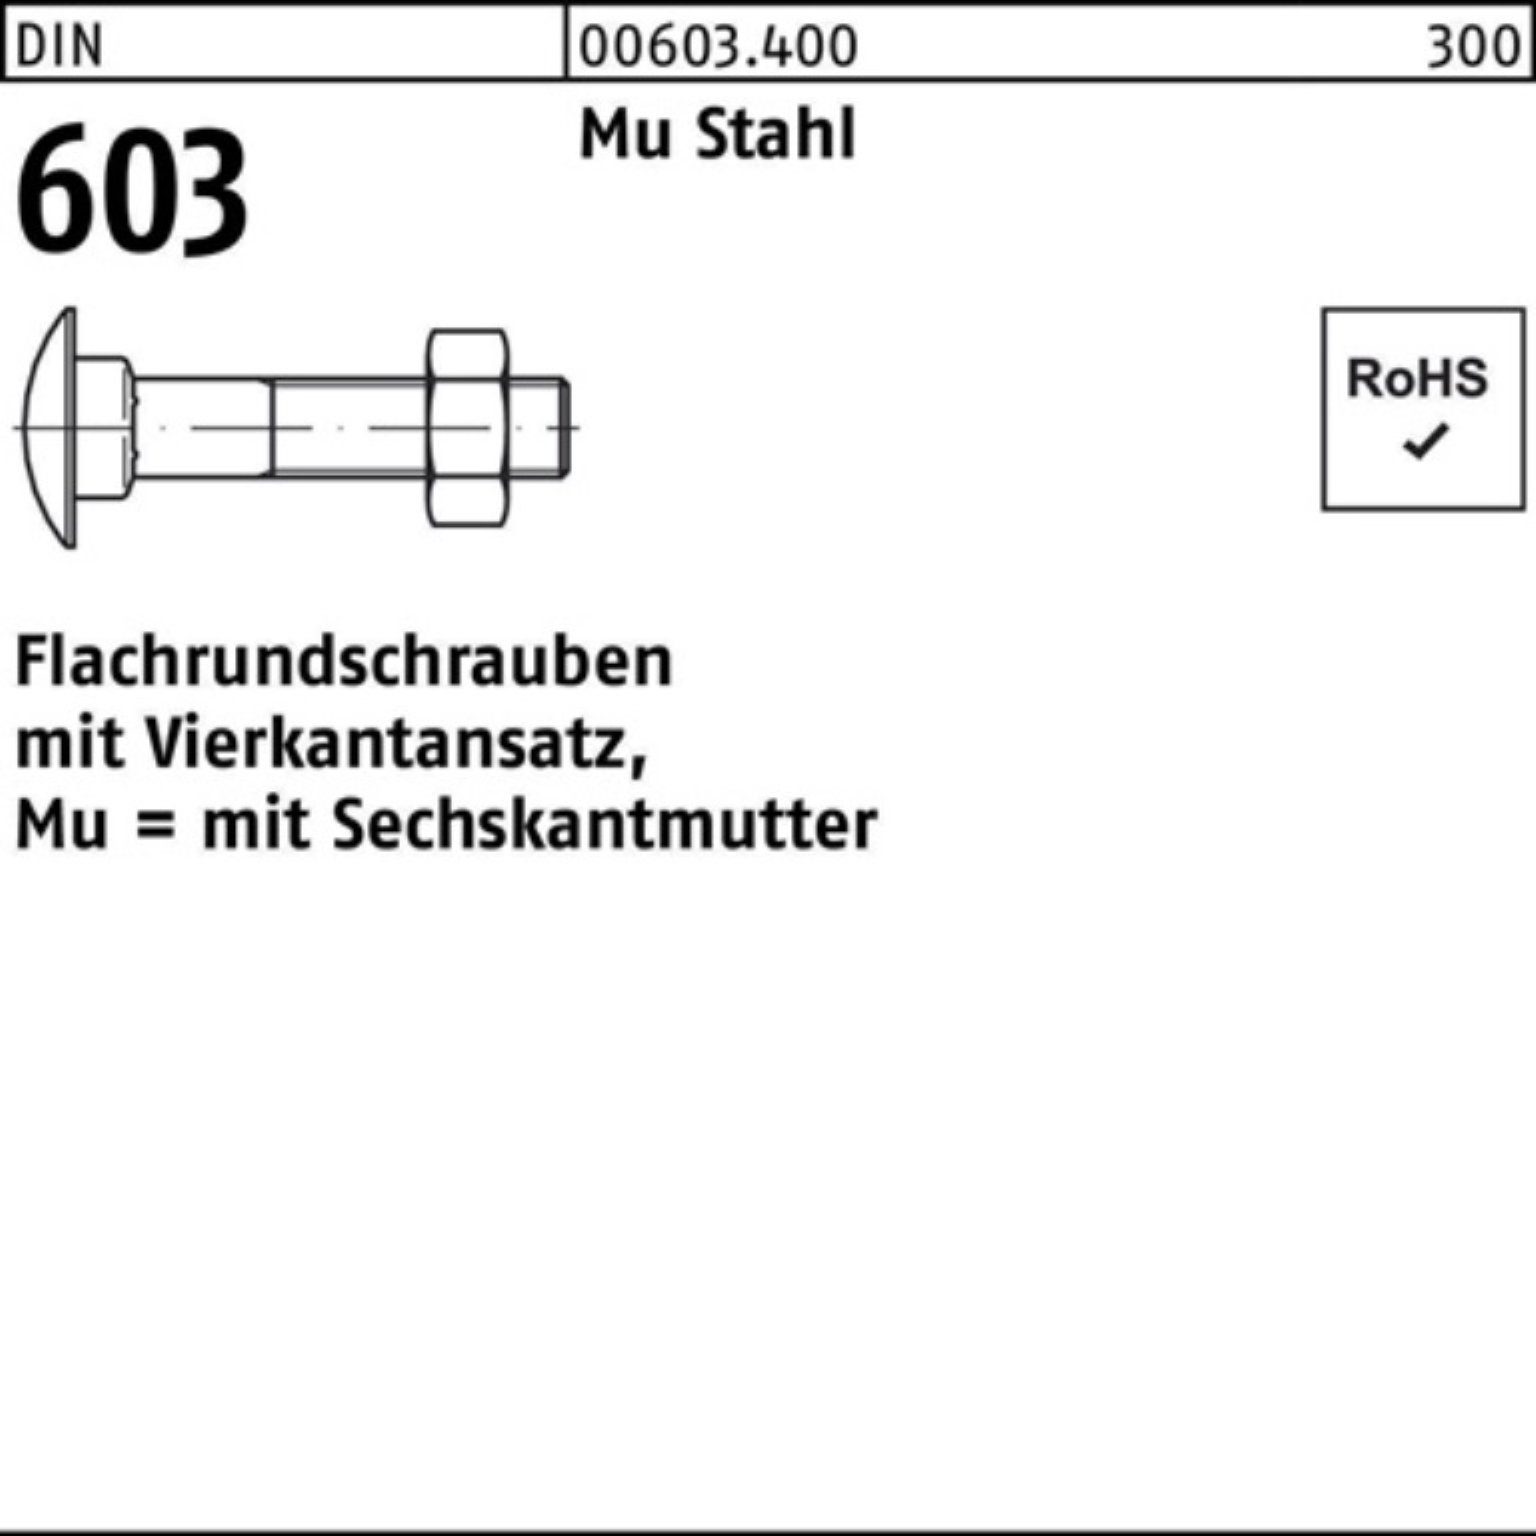 Reyher Schraube 200er Pack Flachrundschraube 603 Vierkantansatz/6-ktmutter DIN M M6x50